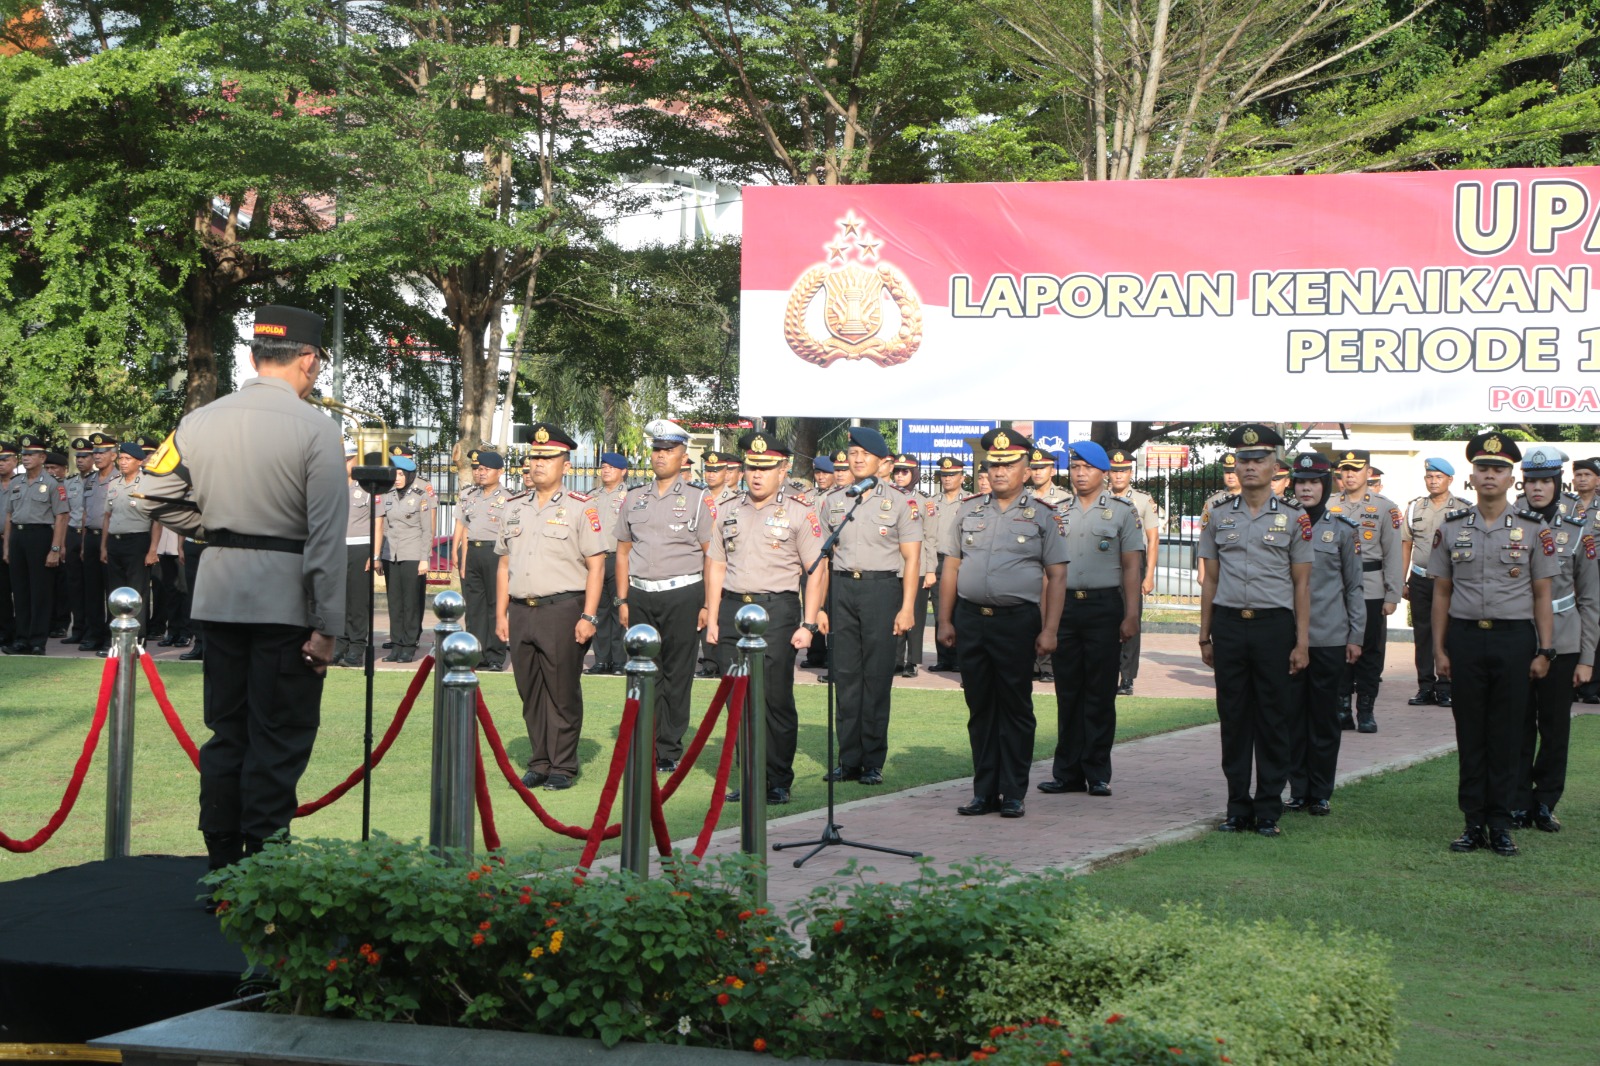 Ratusan Personel di Jajaran Polda Sumbar Naik Pangkat TMT 1 Januari